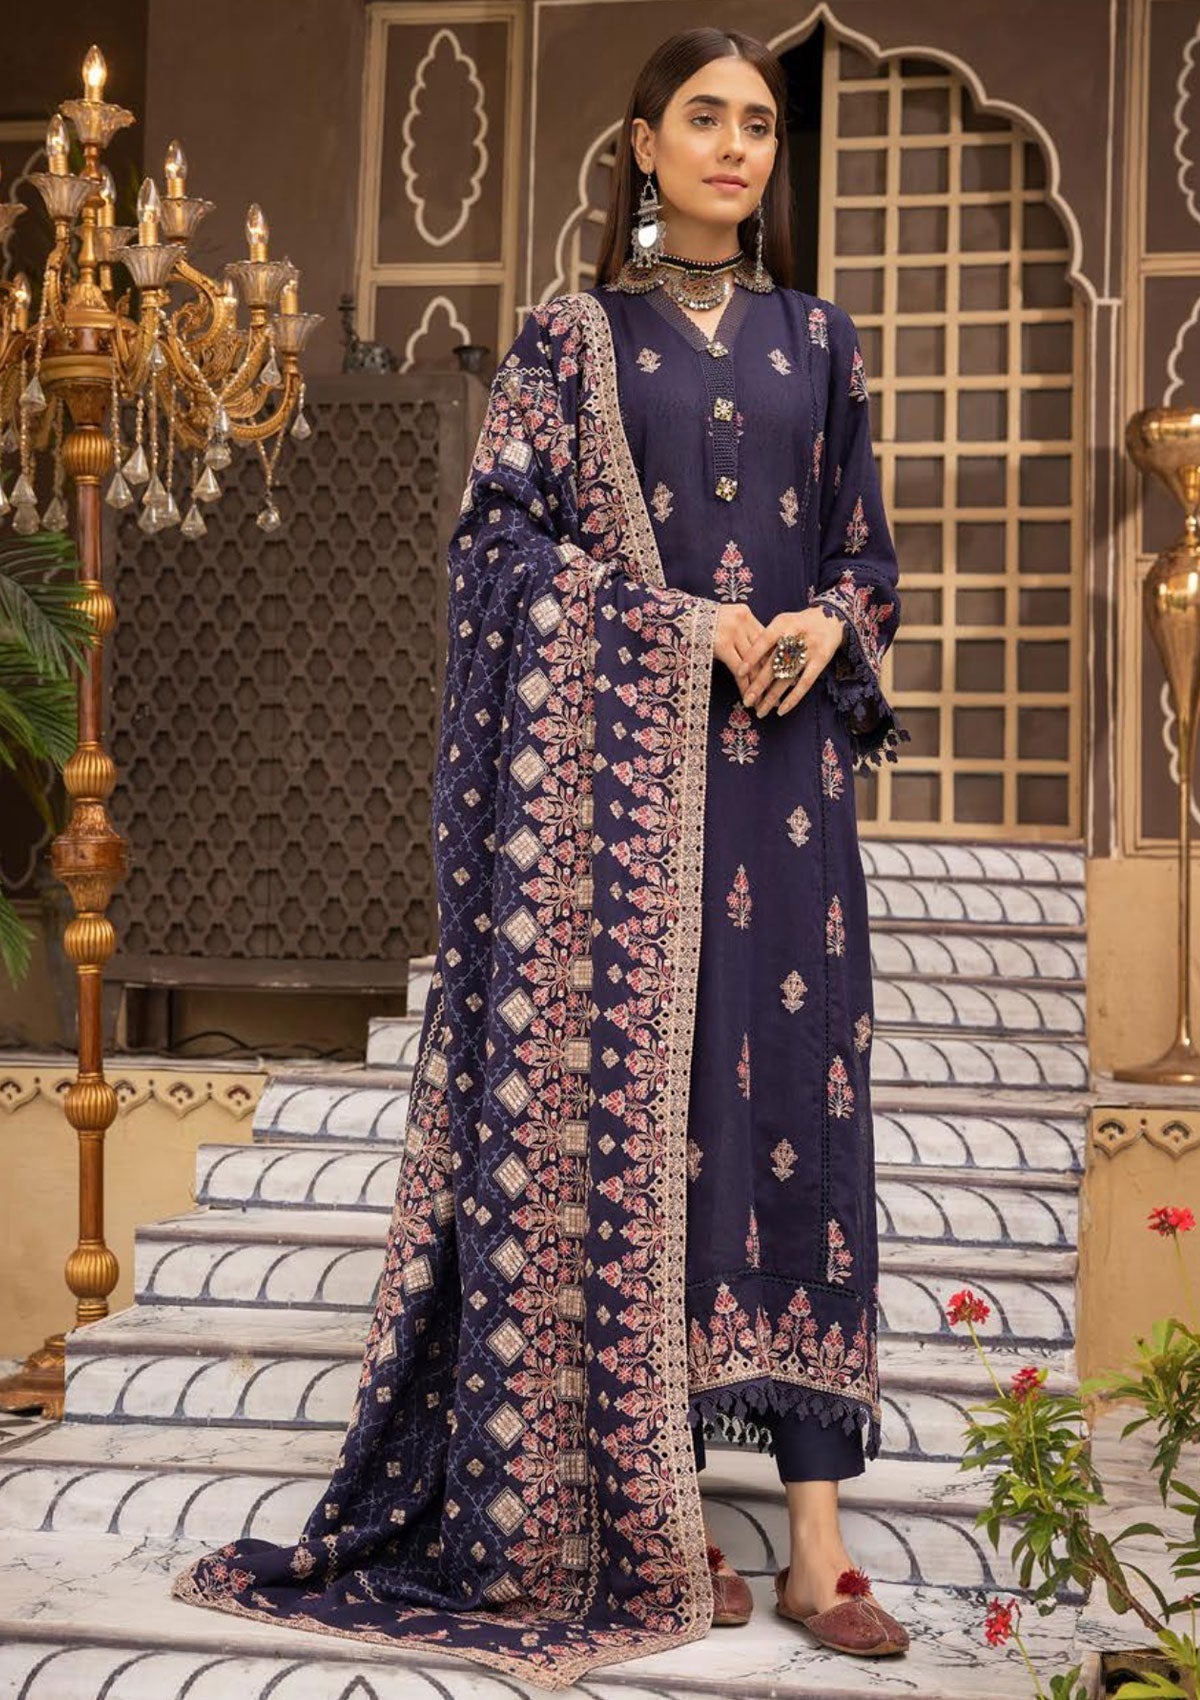 Winter Collection - Shaista - Khoobseerat - Karandi - SKK#370 available at Saleem Fabrics Traditions